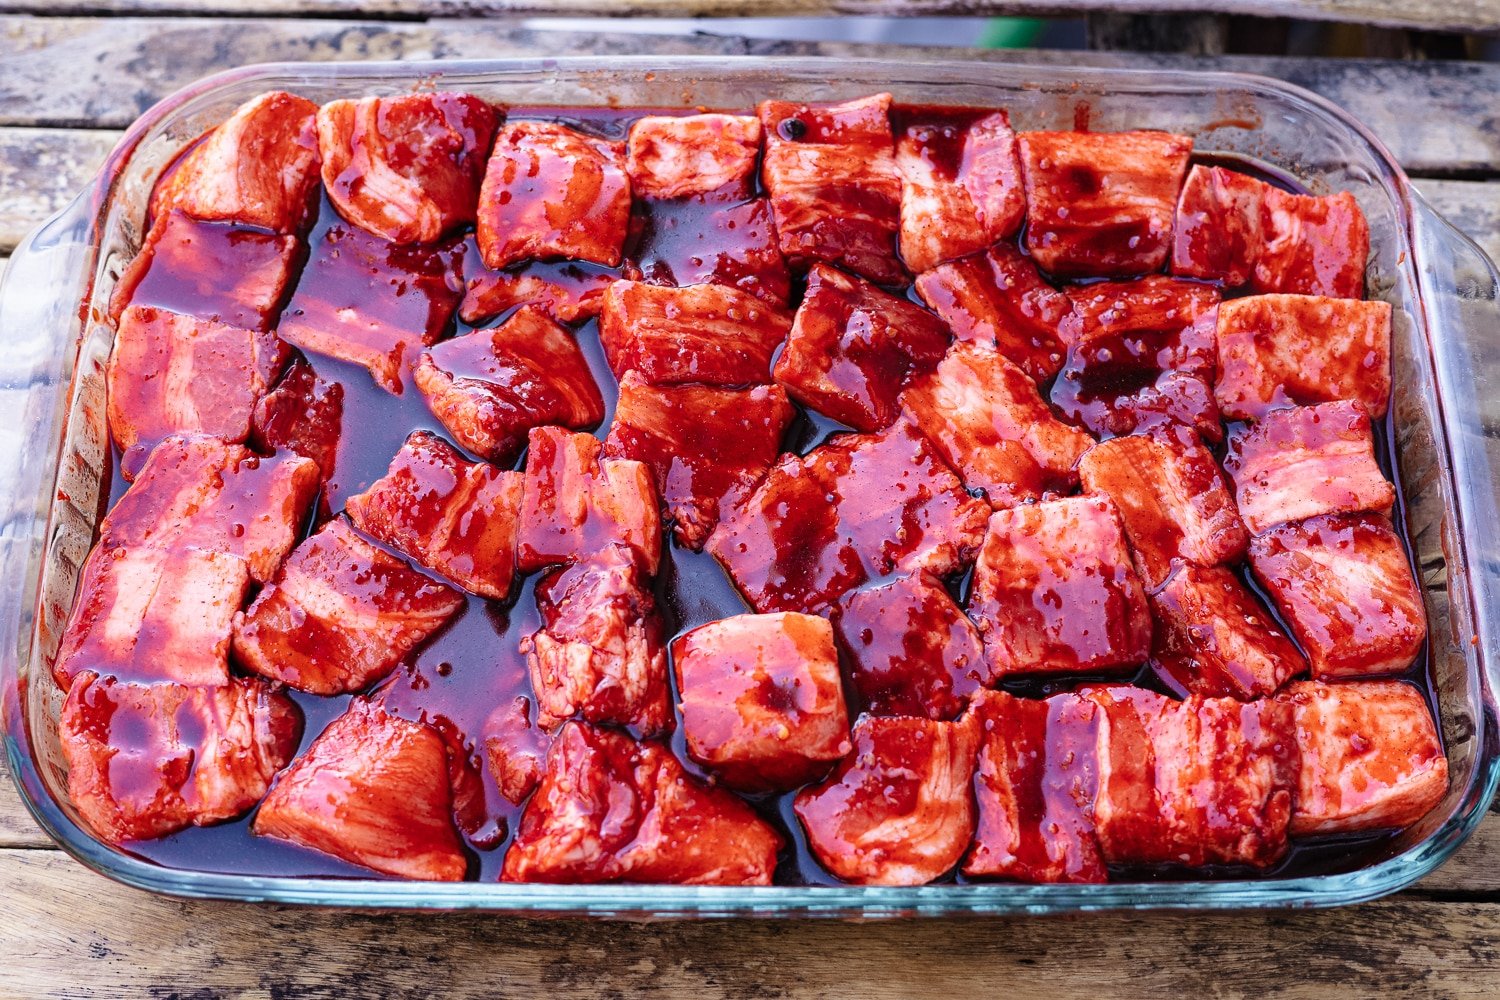 Cubed pork belly in a char siu glaze in a rectangular glass baking dish